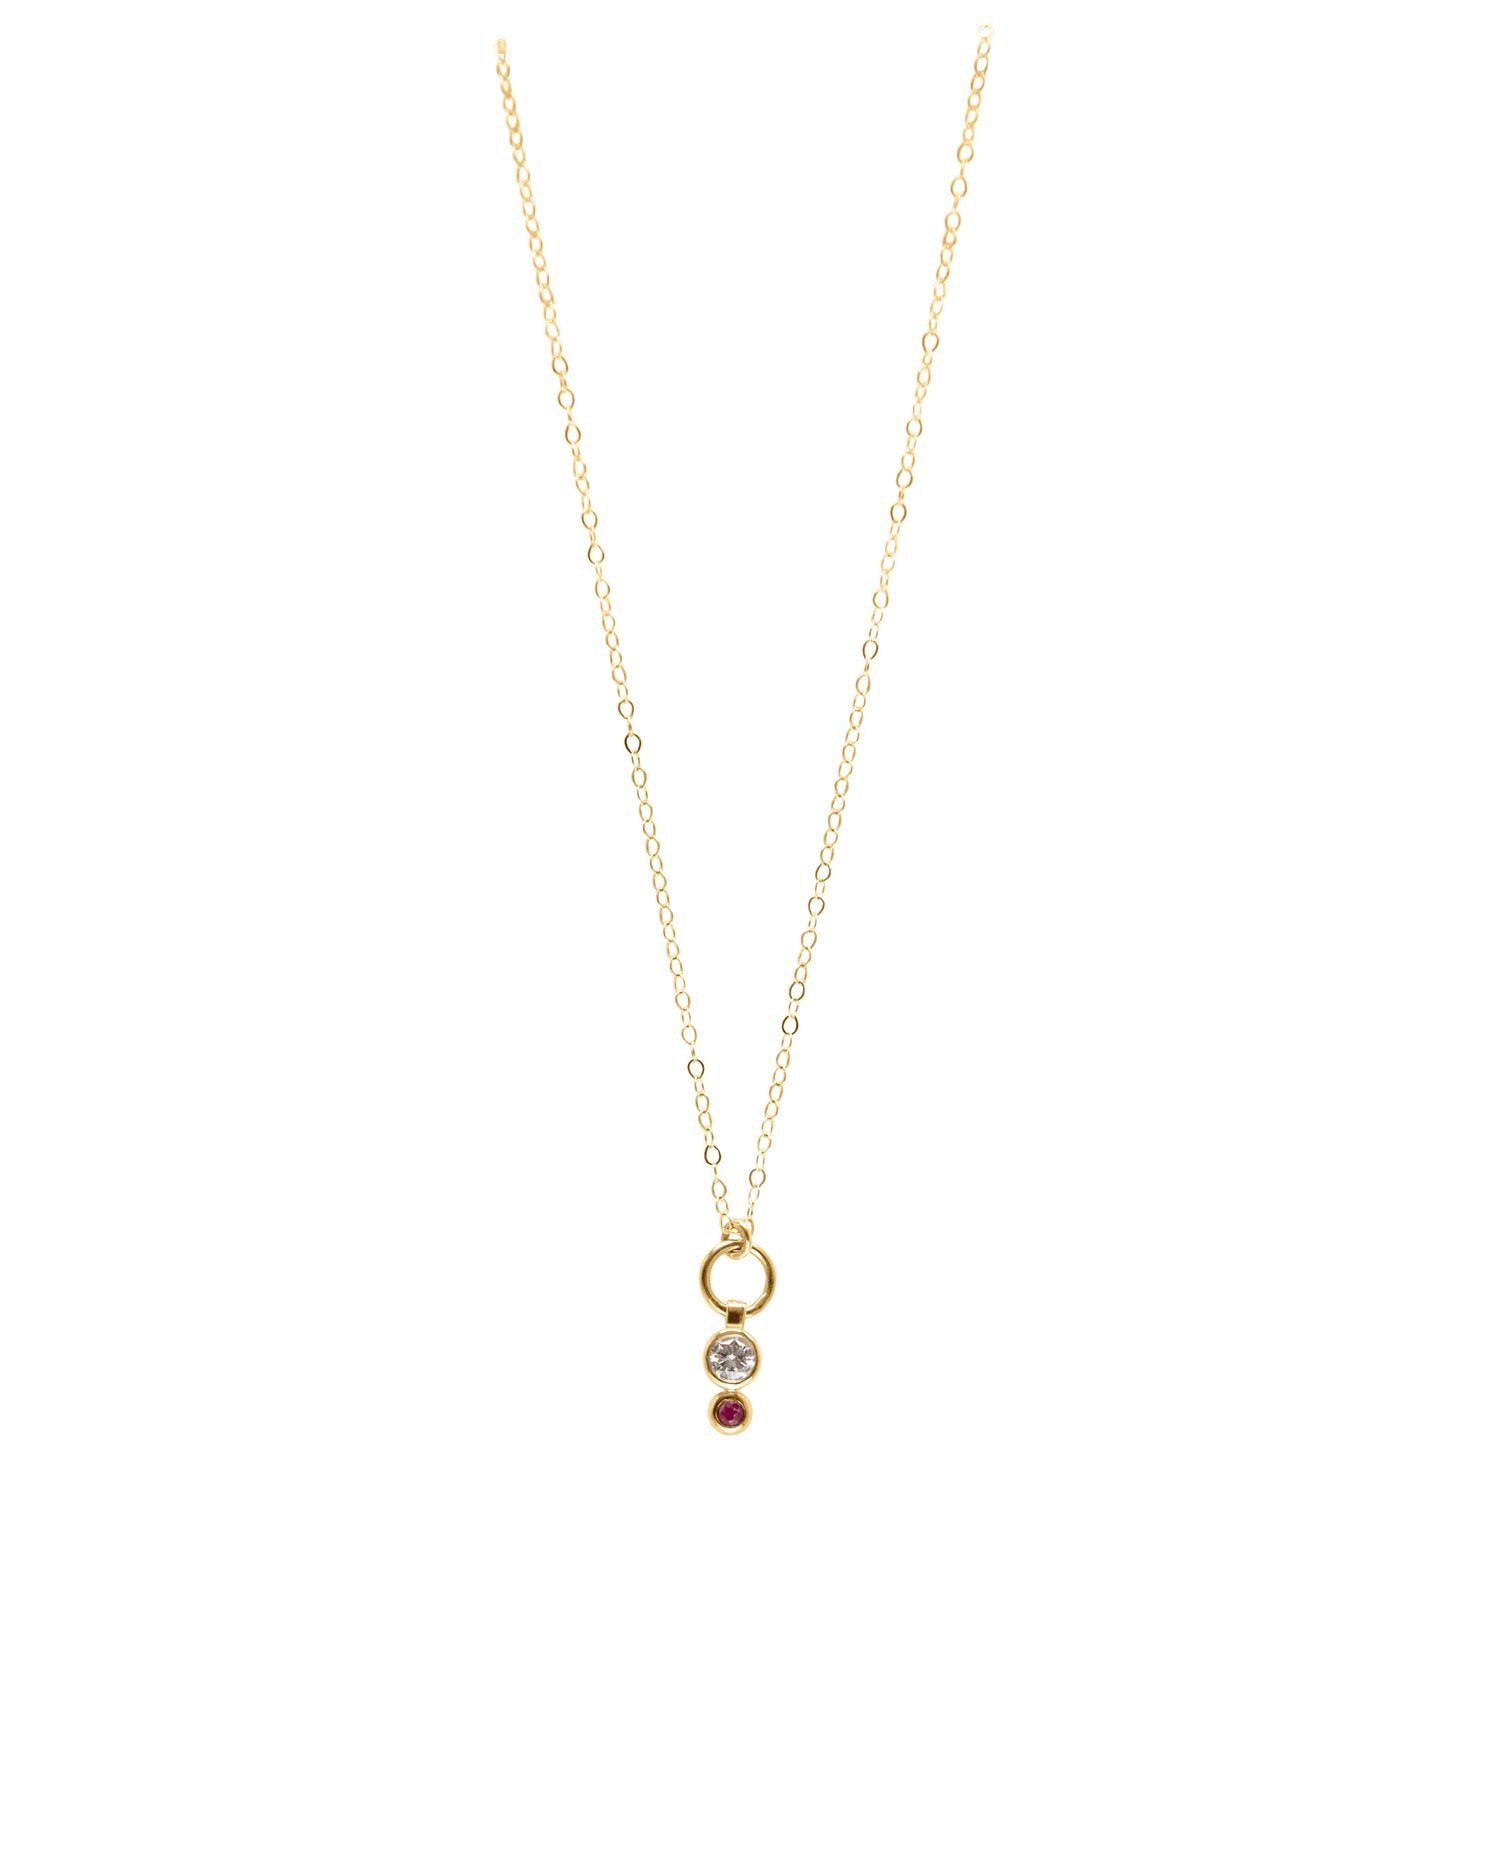 SUN & SELENE persephone necklace